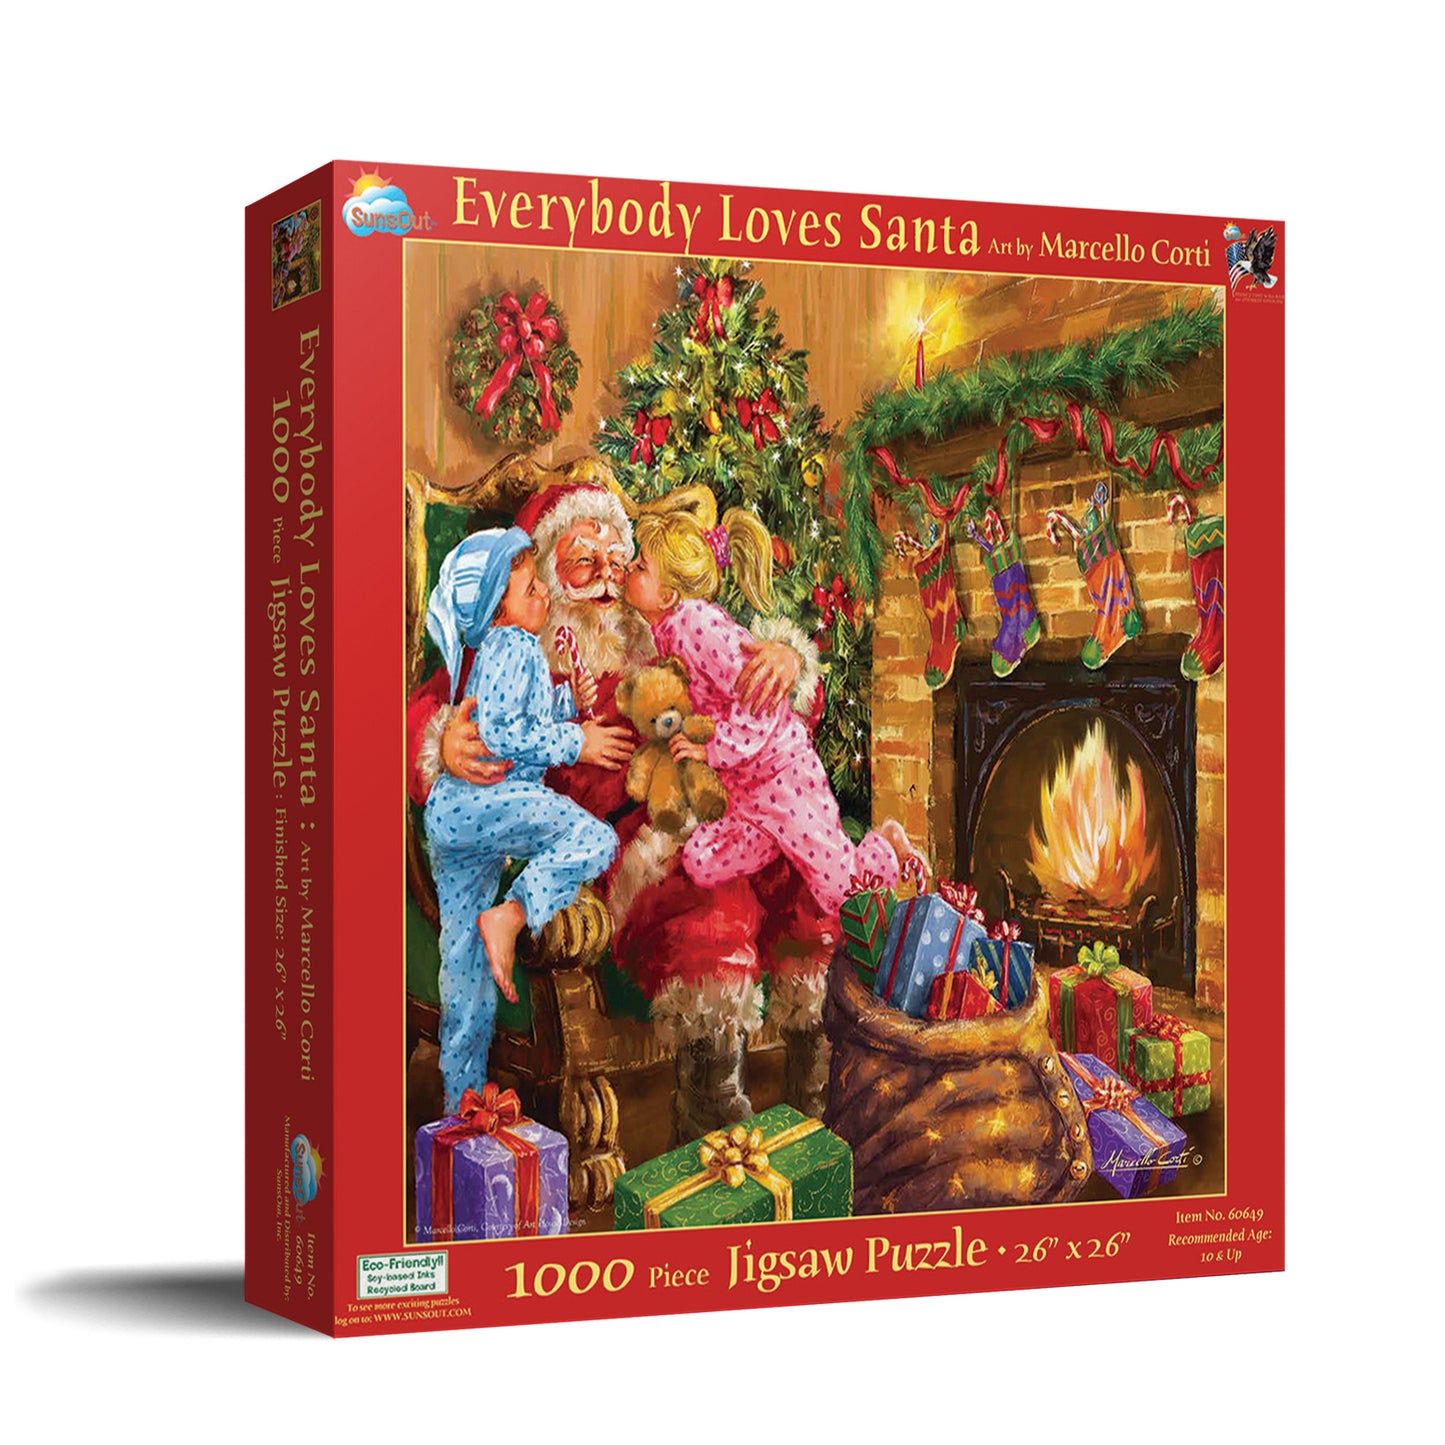 Everyone Loves Santa - 1000 Piece Jigsaw Puzzle